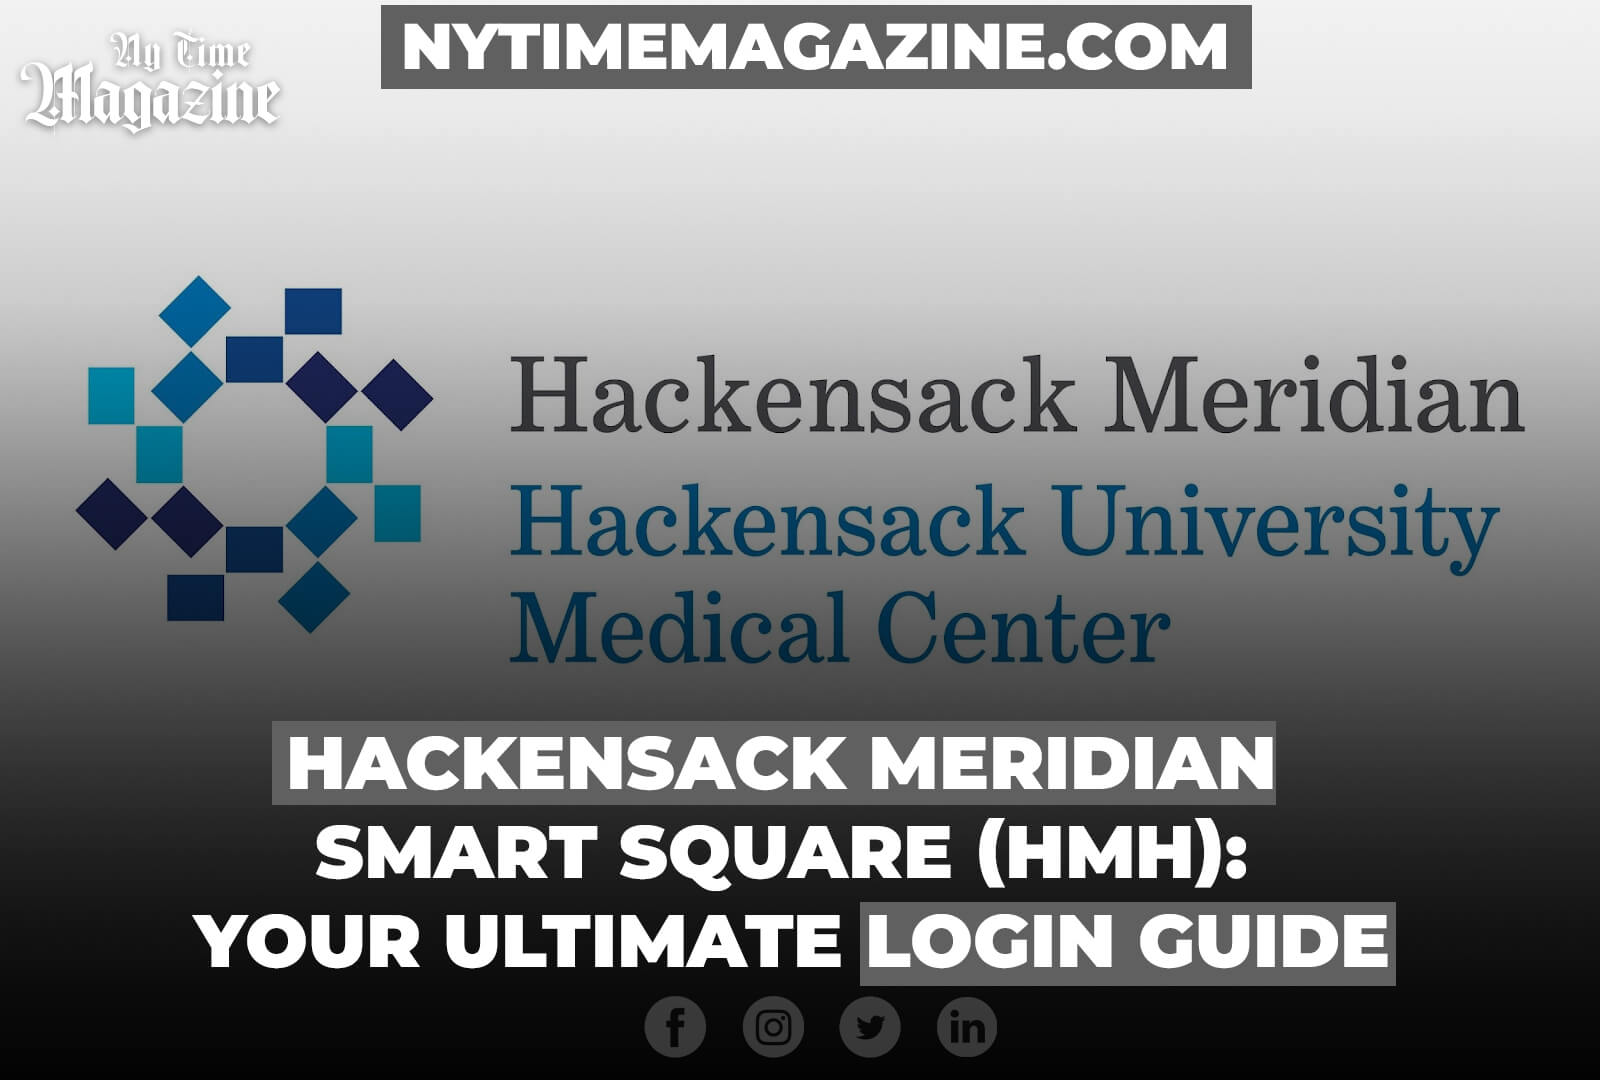 HACKENSACK MERIDIAN SMART SQUARE (HMH): YOUR ULTIMATE LOGIN GUIDE